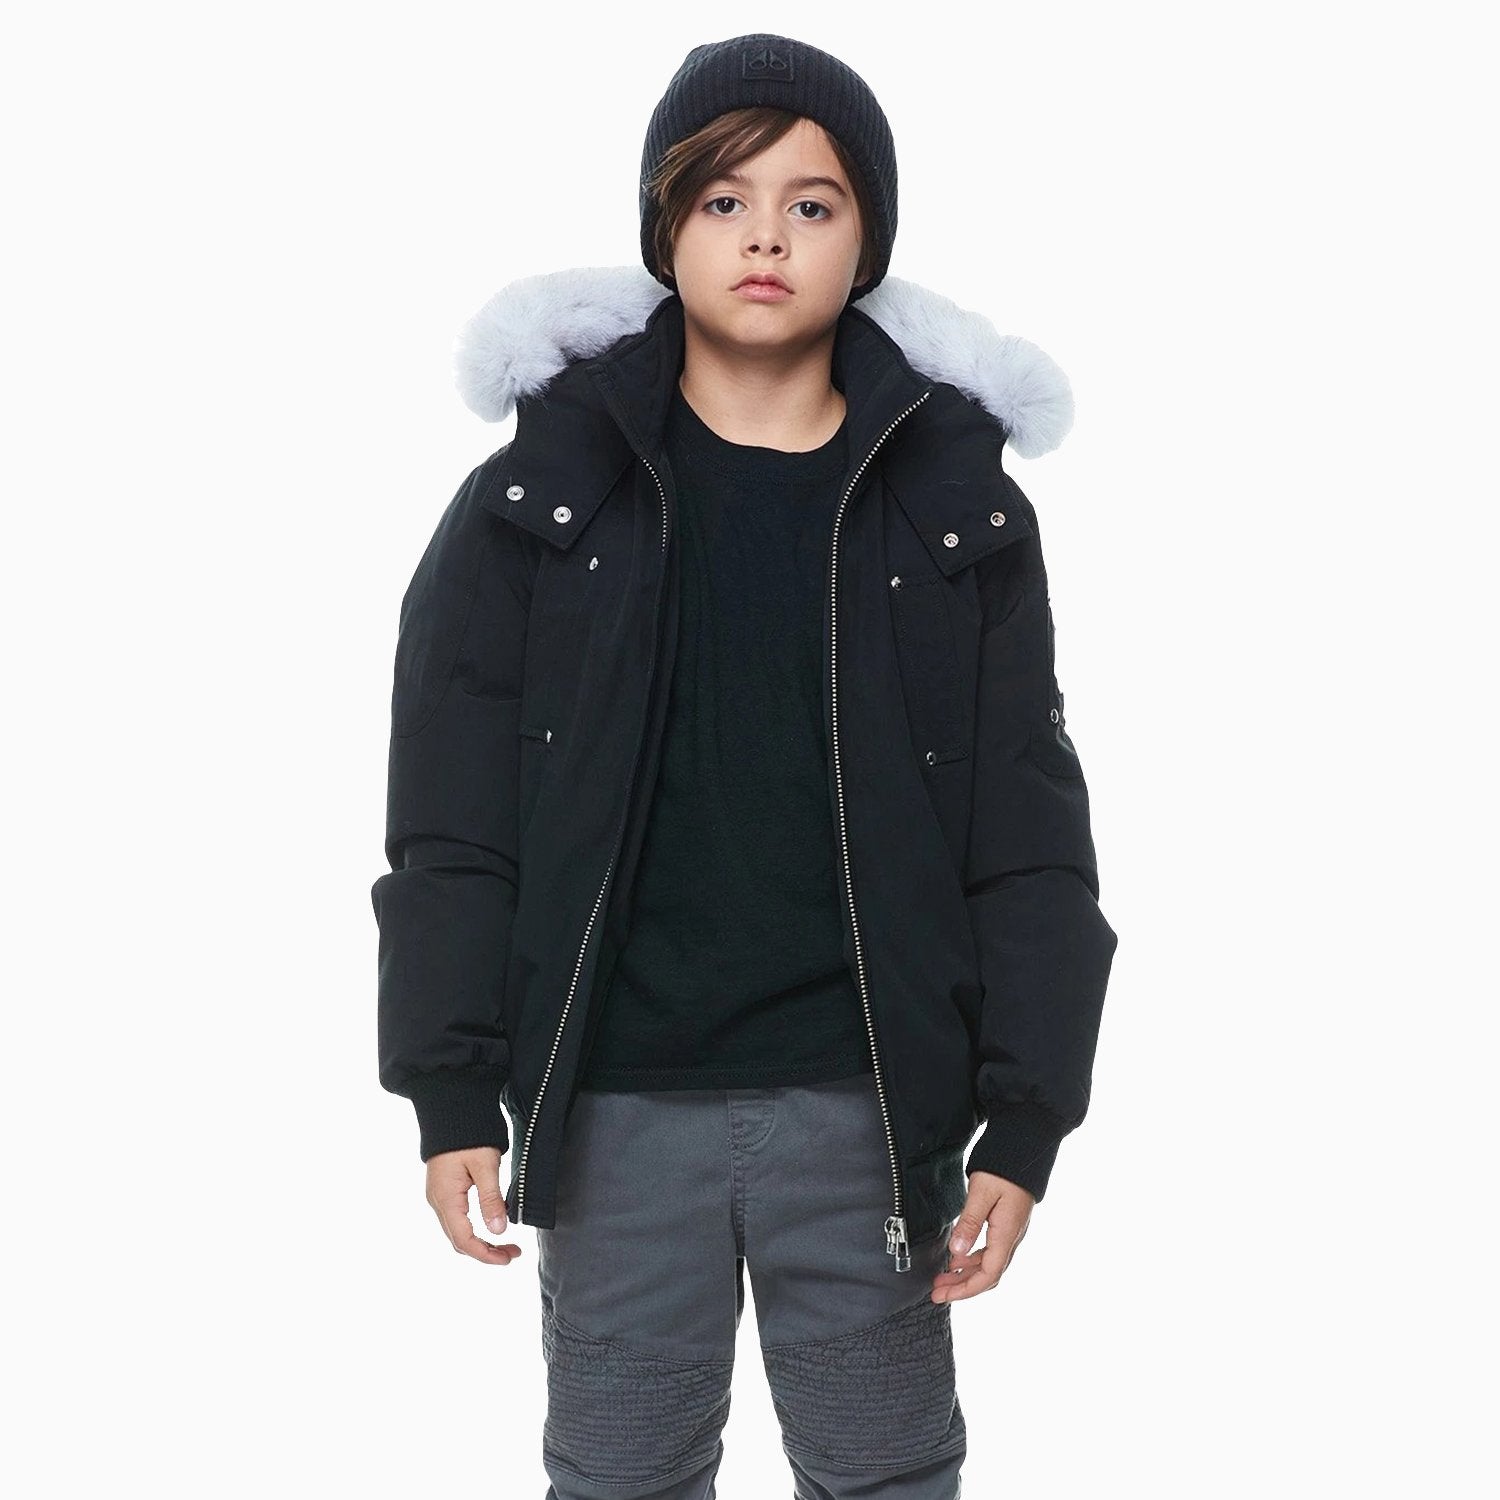 MOOSE KNUCKLES Kid's Bomber Jacket - Color: Black/Natural Fox - Kids Premium Clothing -